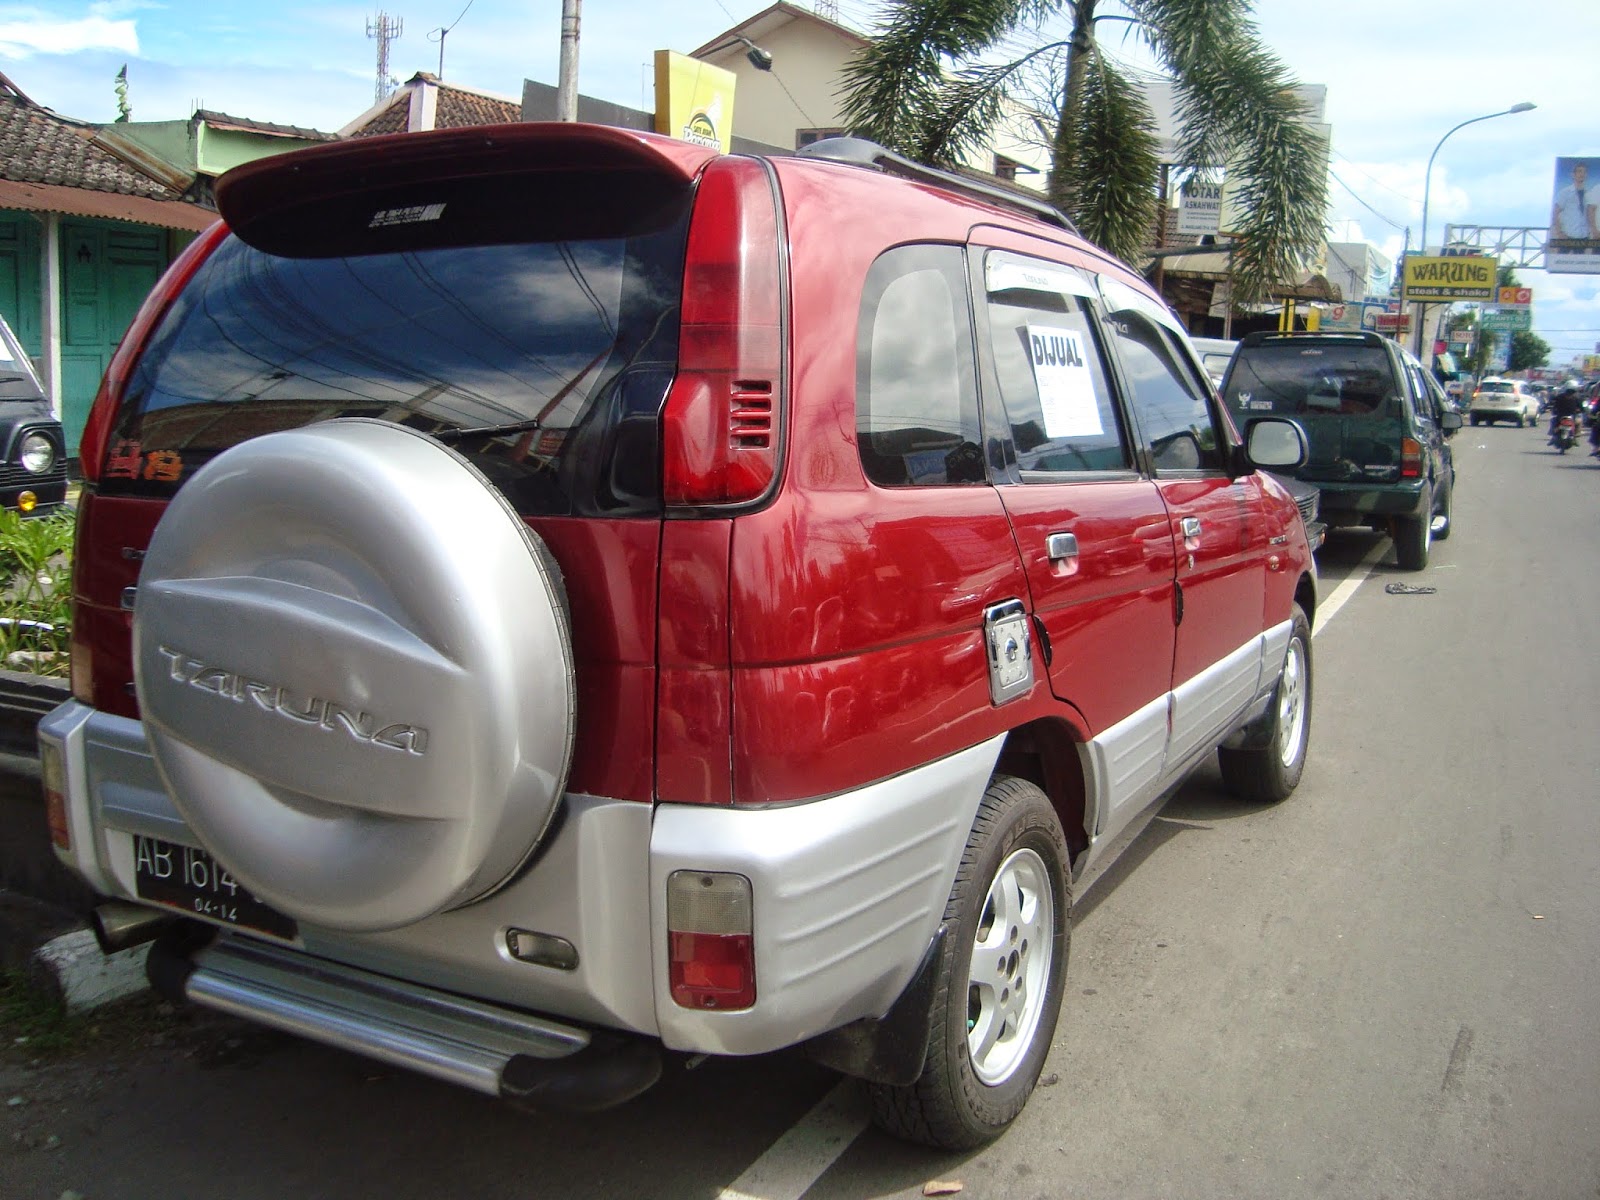 Mobil Bekas Murah Di Yogyakarta